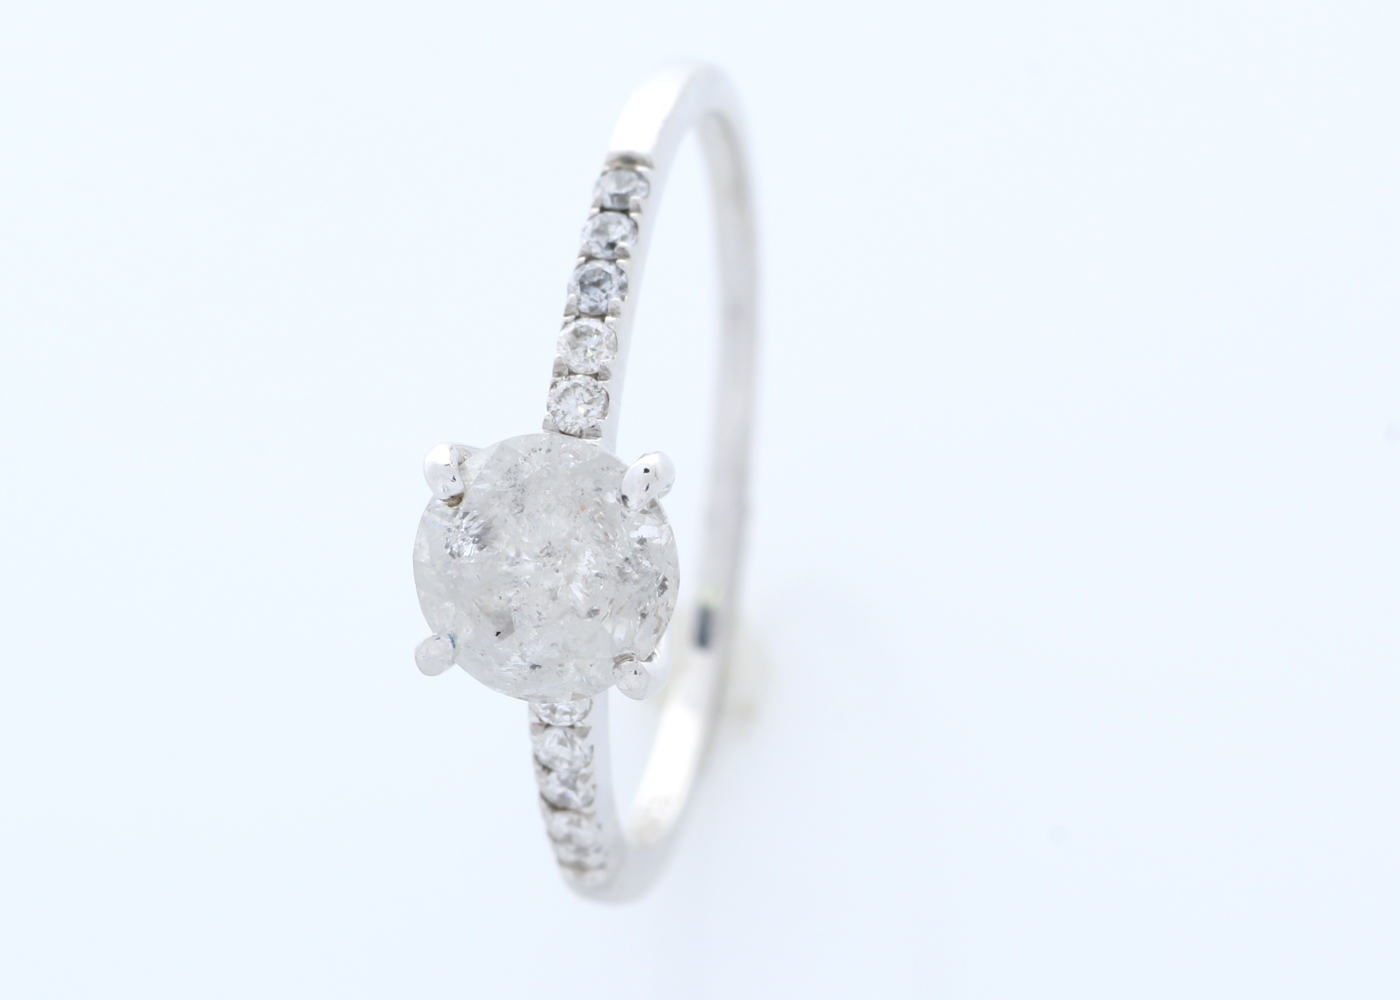 18k White Gold Stone Set Shoulders Diamond Ring 1.05 Carats - Image 3 of 4